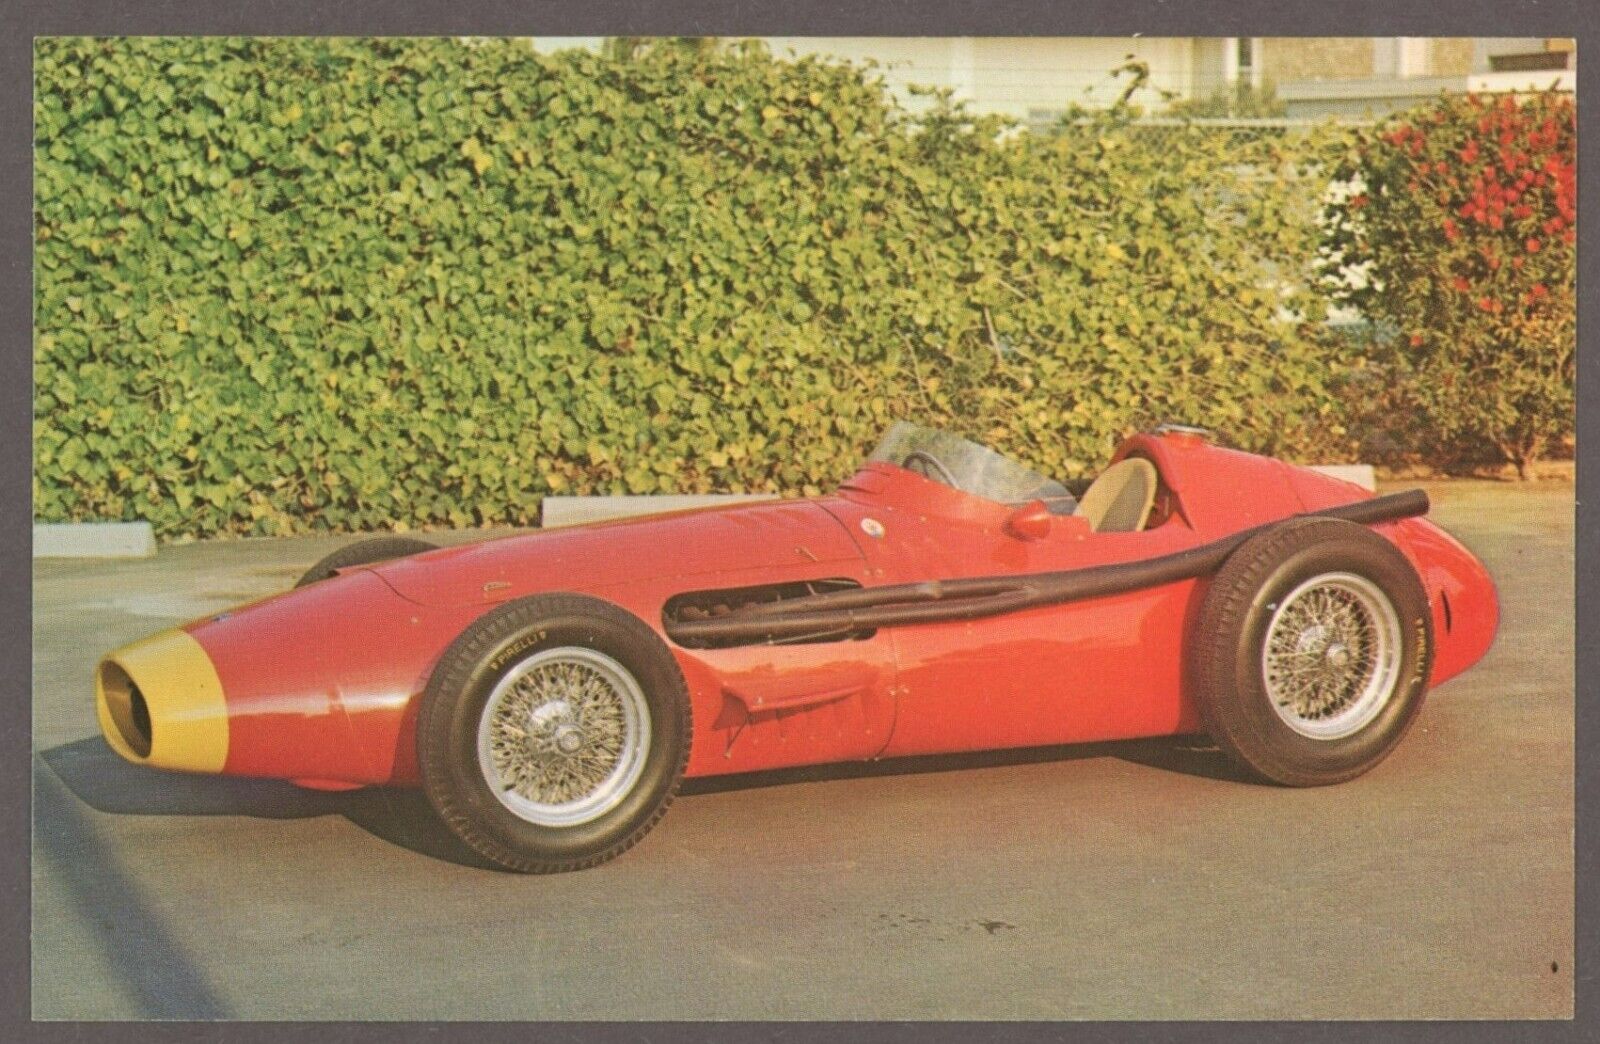 1954 Maserati 250F Grand Prix Racer Automobile Classic Car Postcard